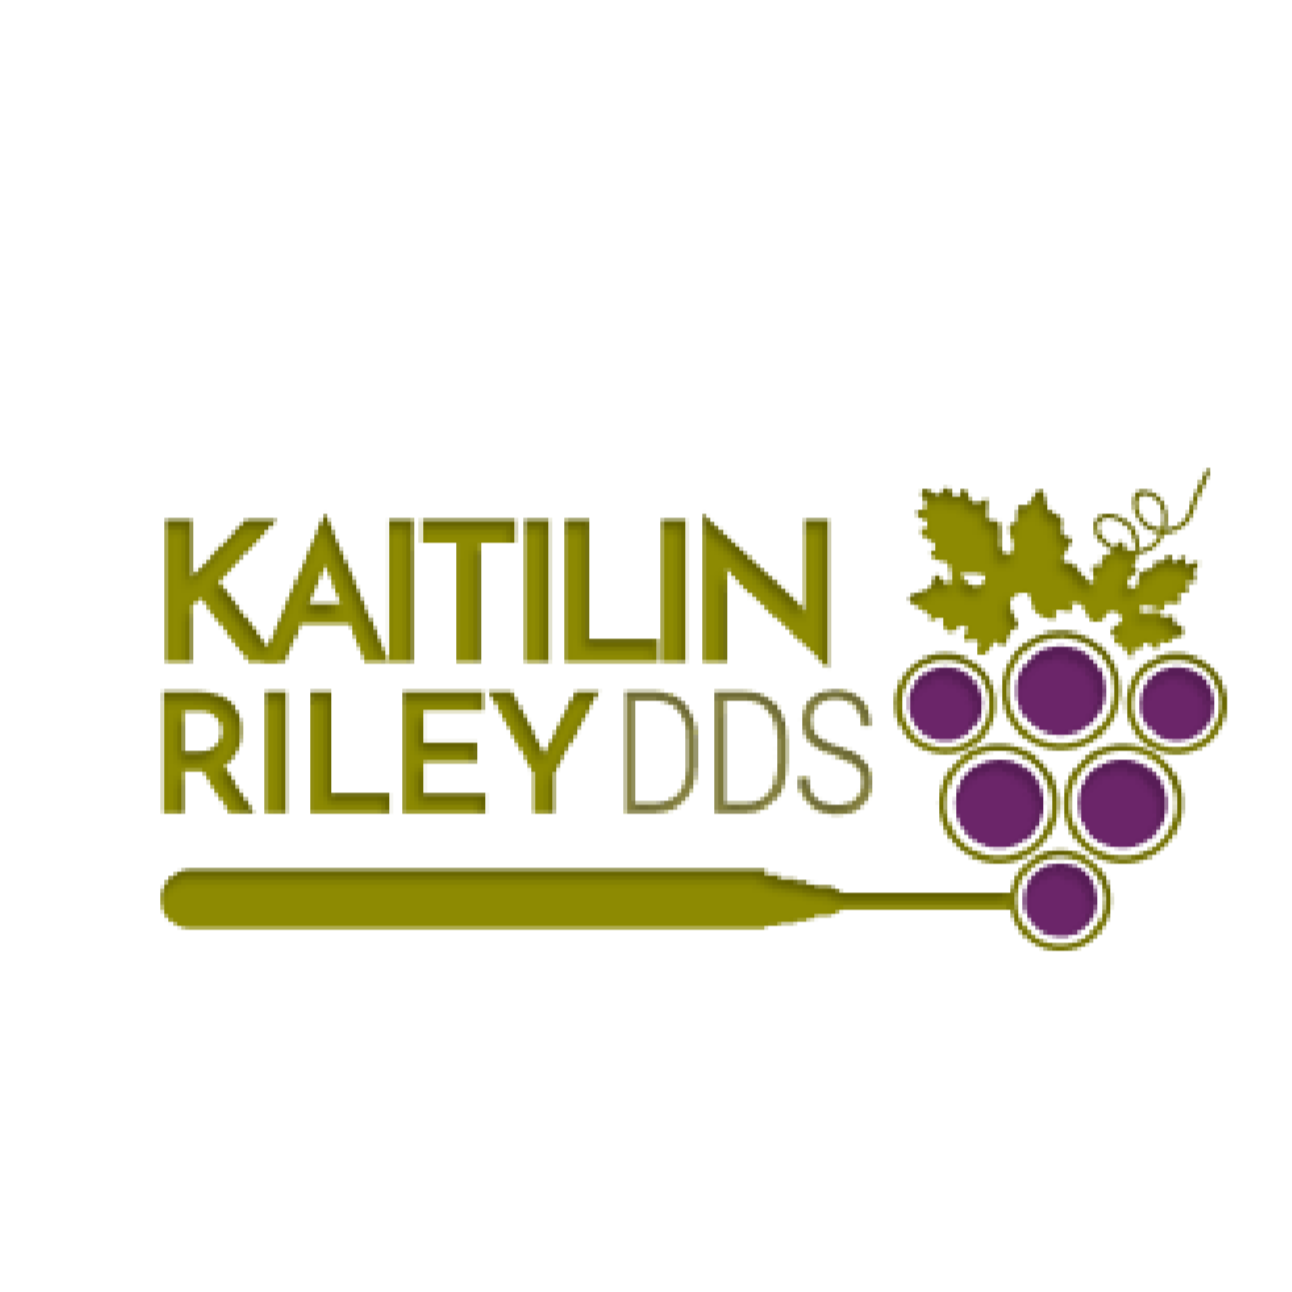 Kaitilin K Riley, DDS - Paso Robles, CA 93446 - (805)238-3880 | ShowMeLocal.com